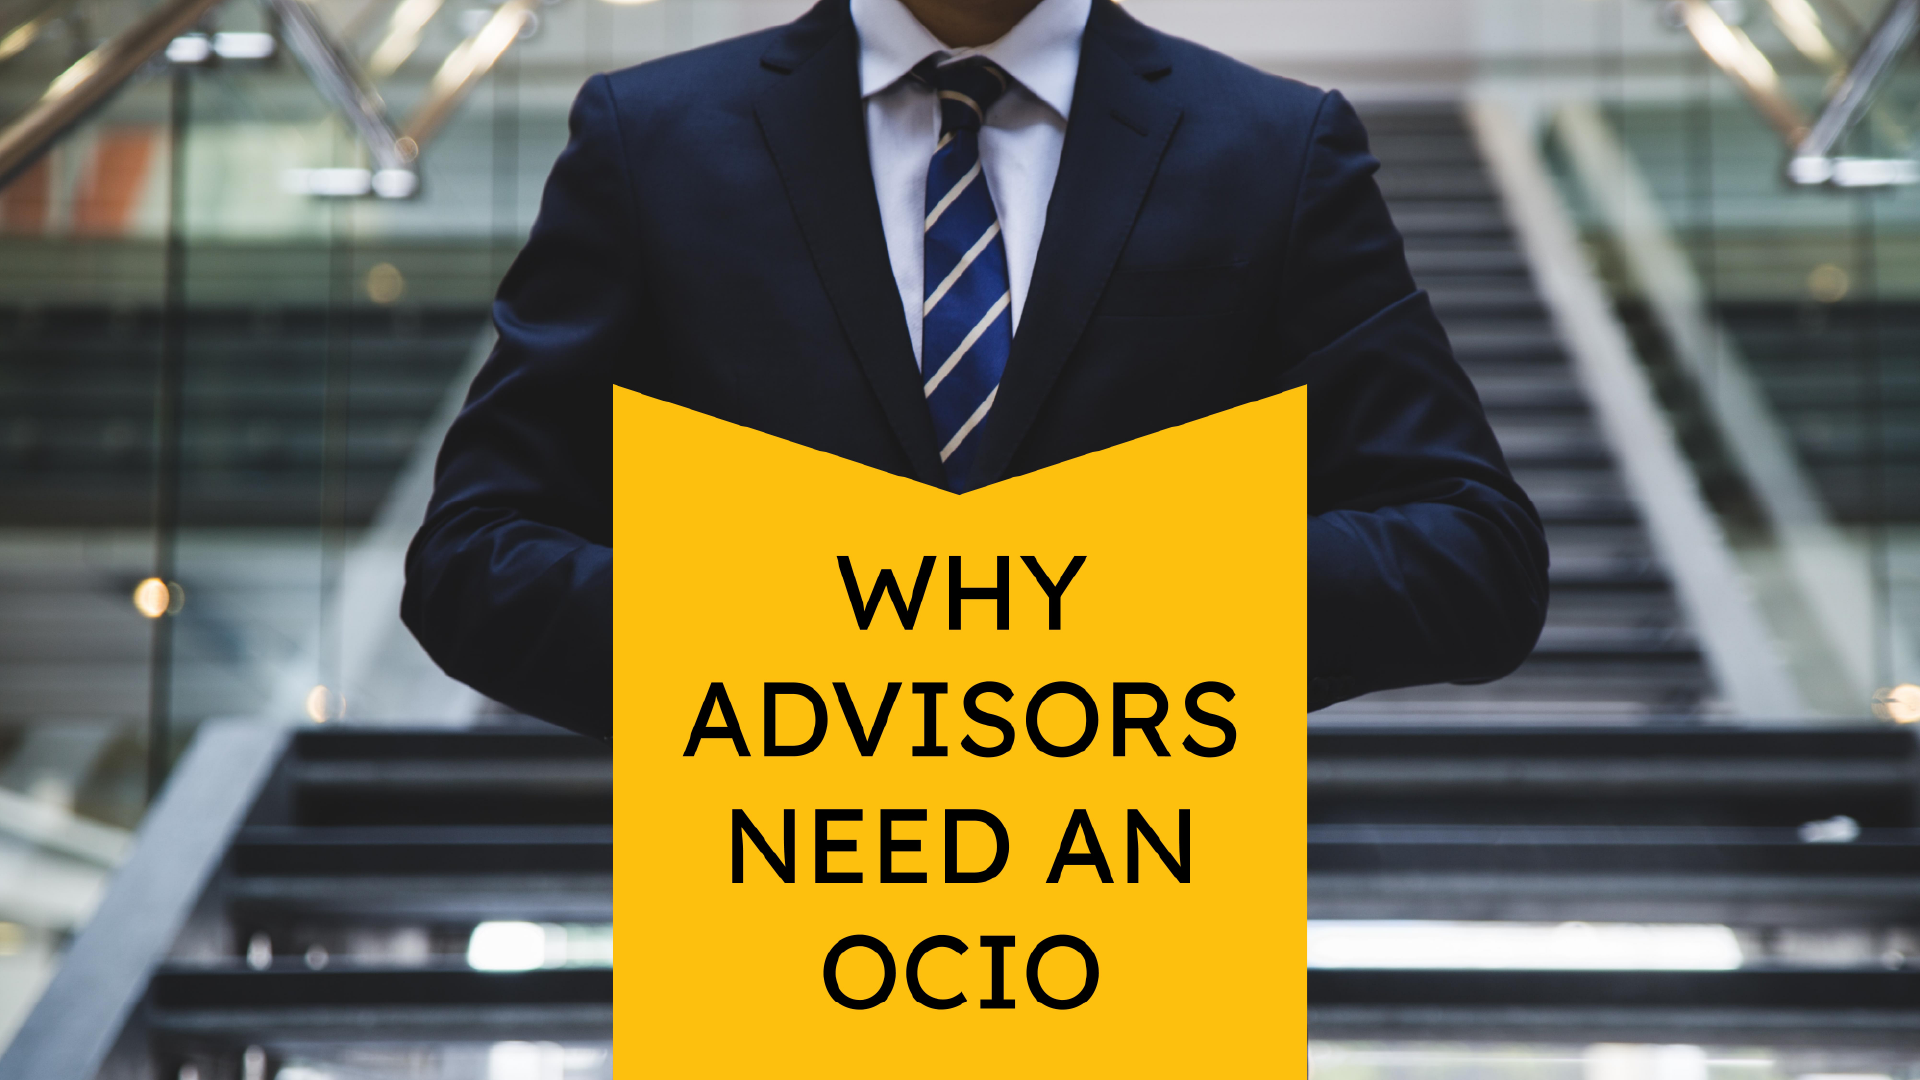 Why Advisors Need an OCIO